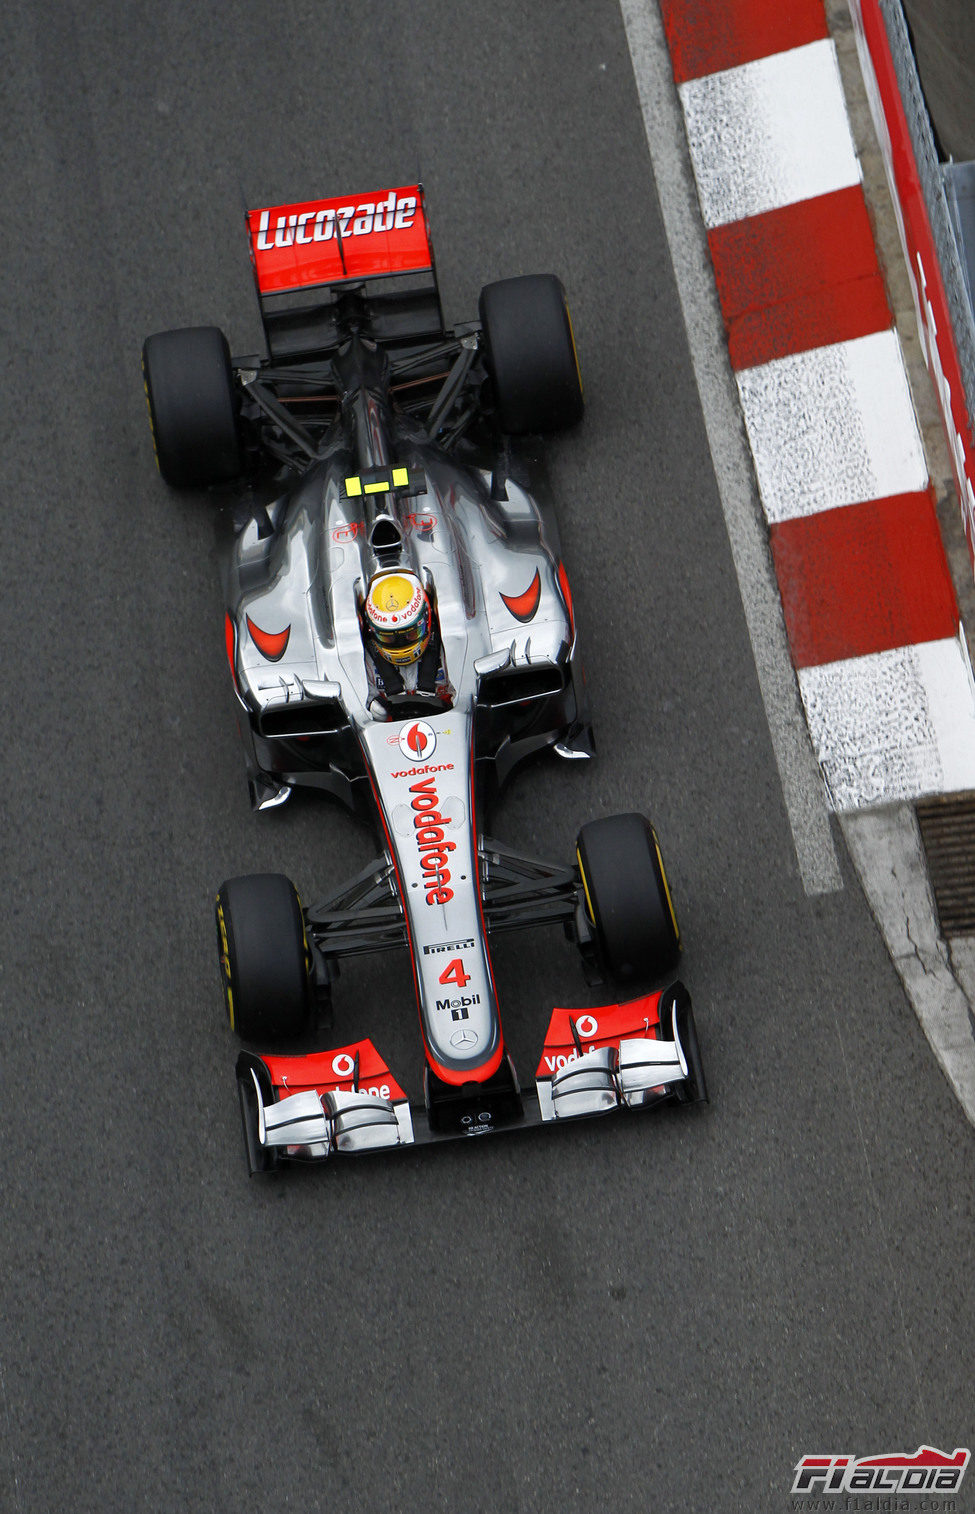 Vista superior del monoplaza de Lewis Hamilton